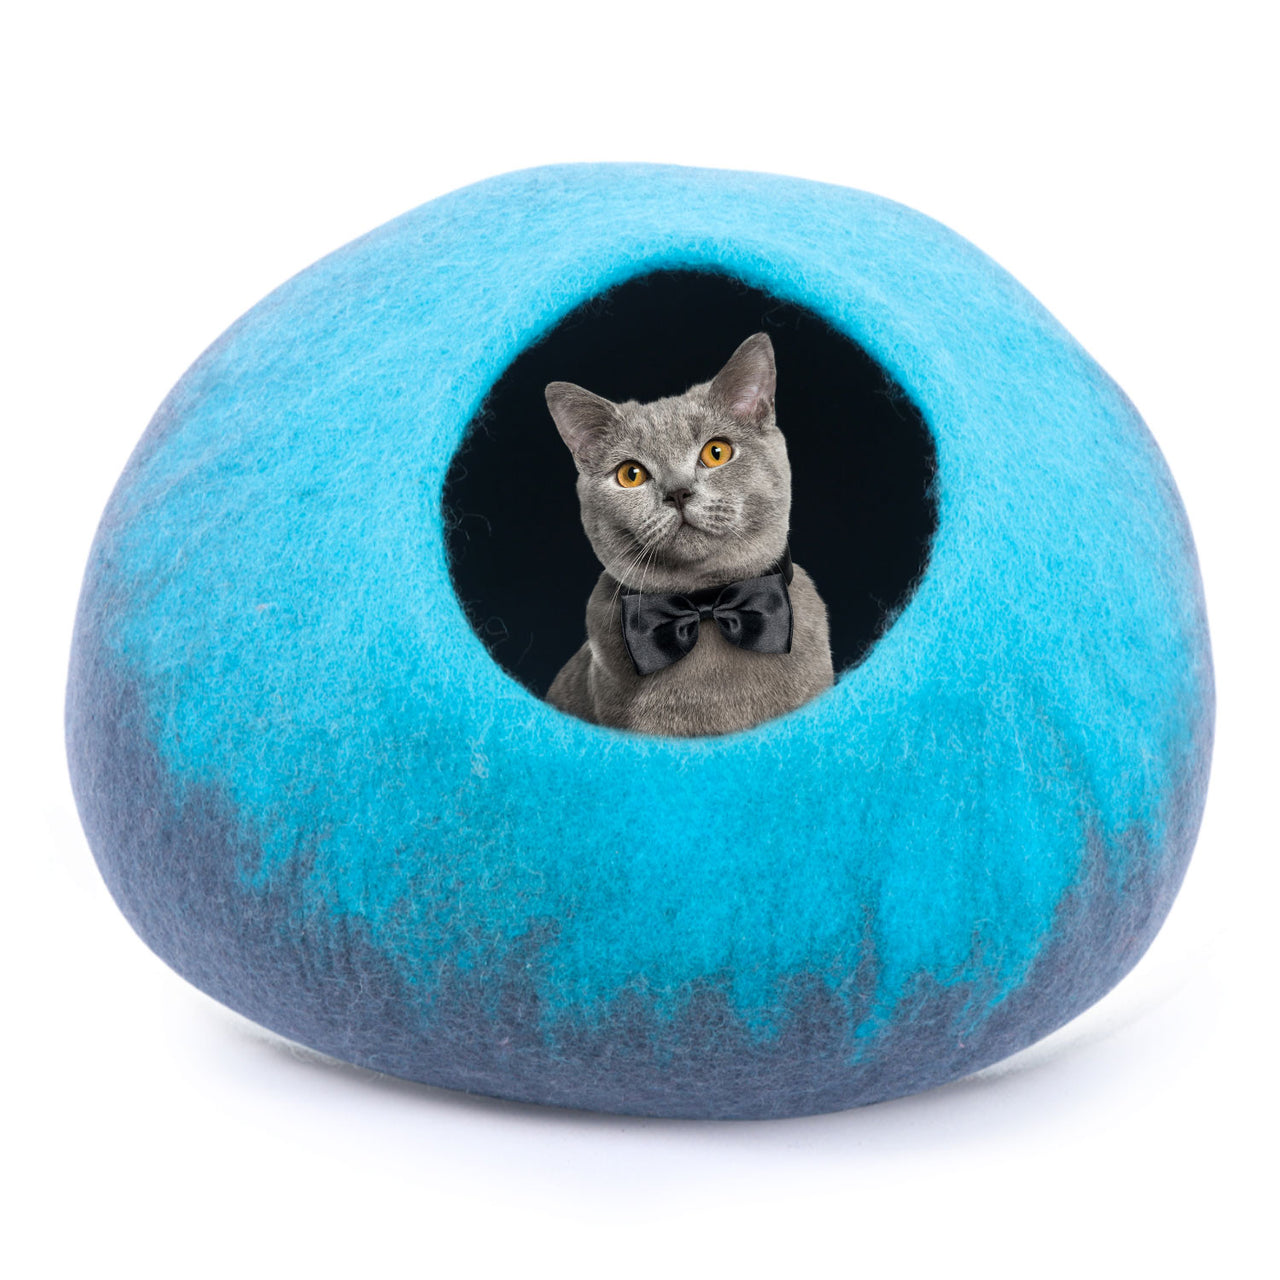 Felt Cat Cave, Wool Cat Cave, Enclosed Cat Bed, Cat Pod, Cat Dome Nest Hiding Place